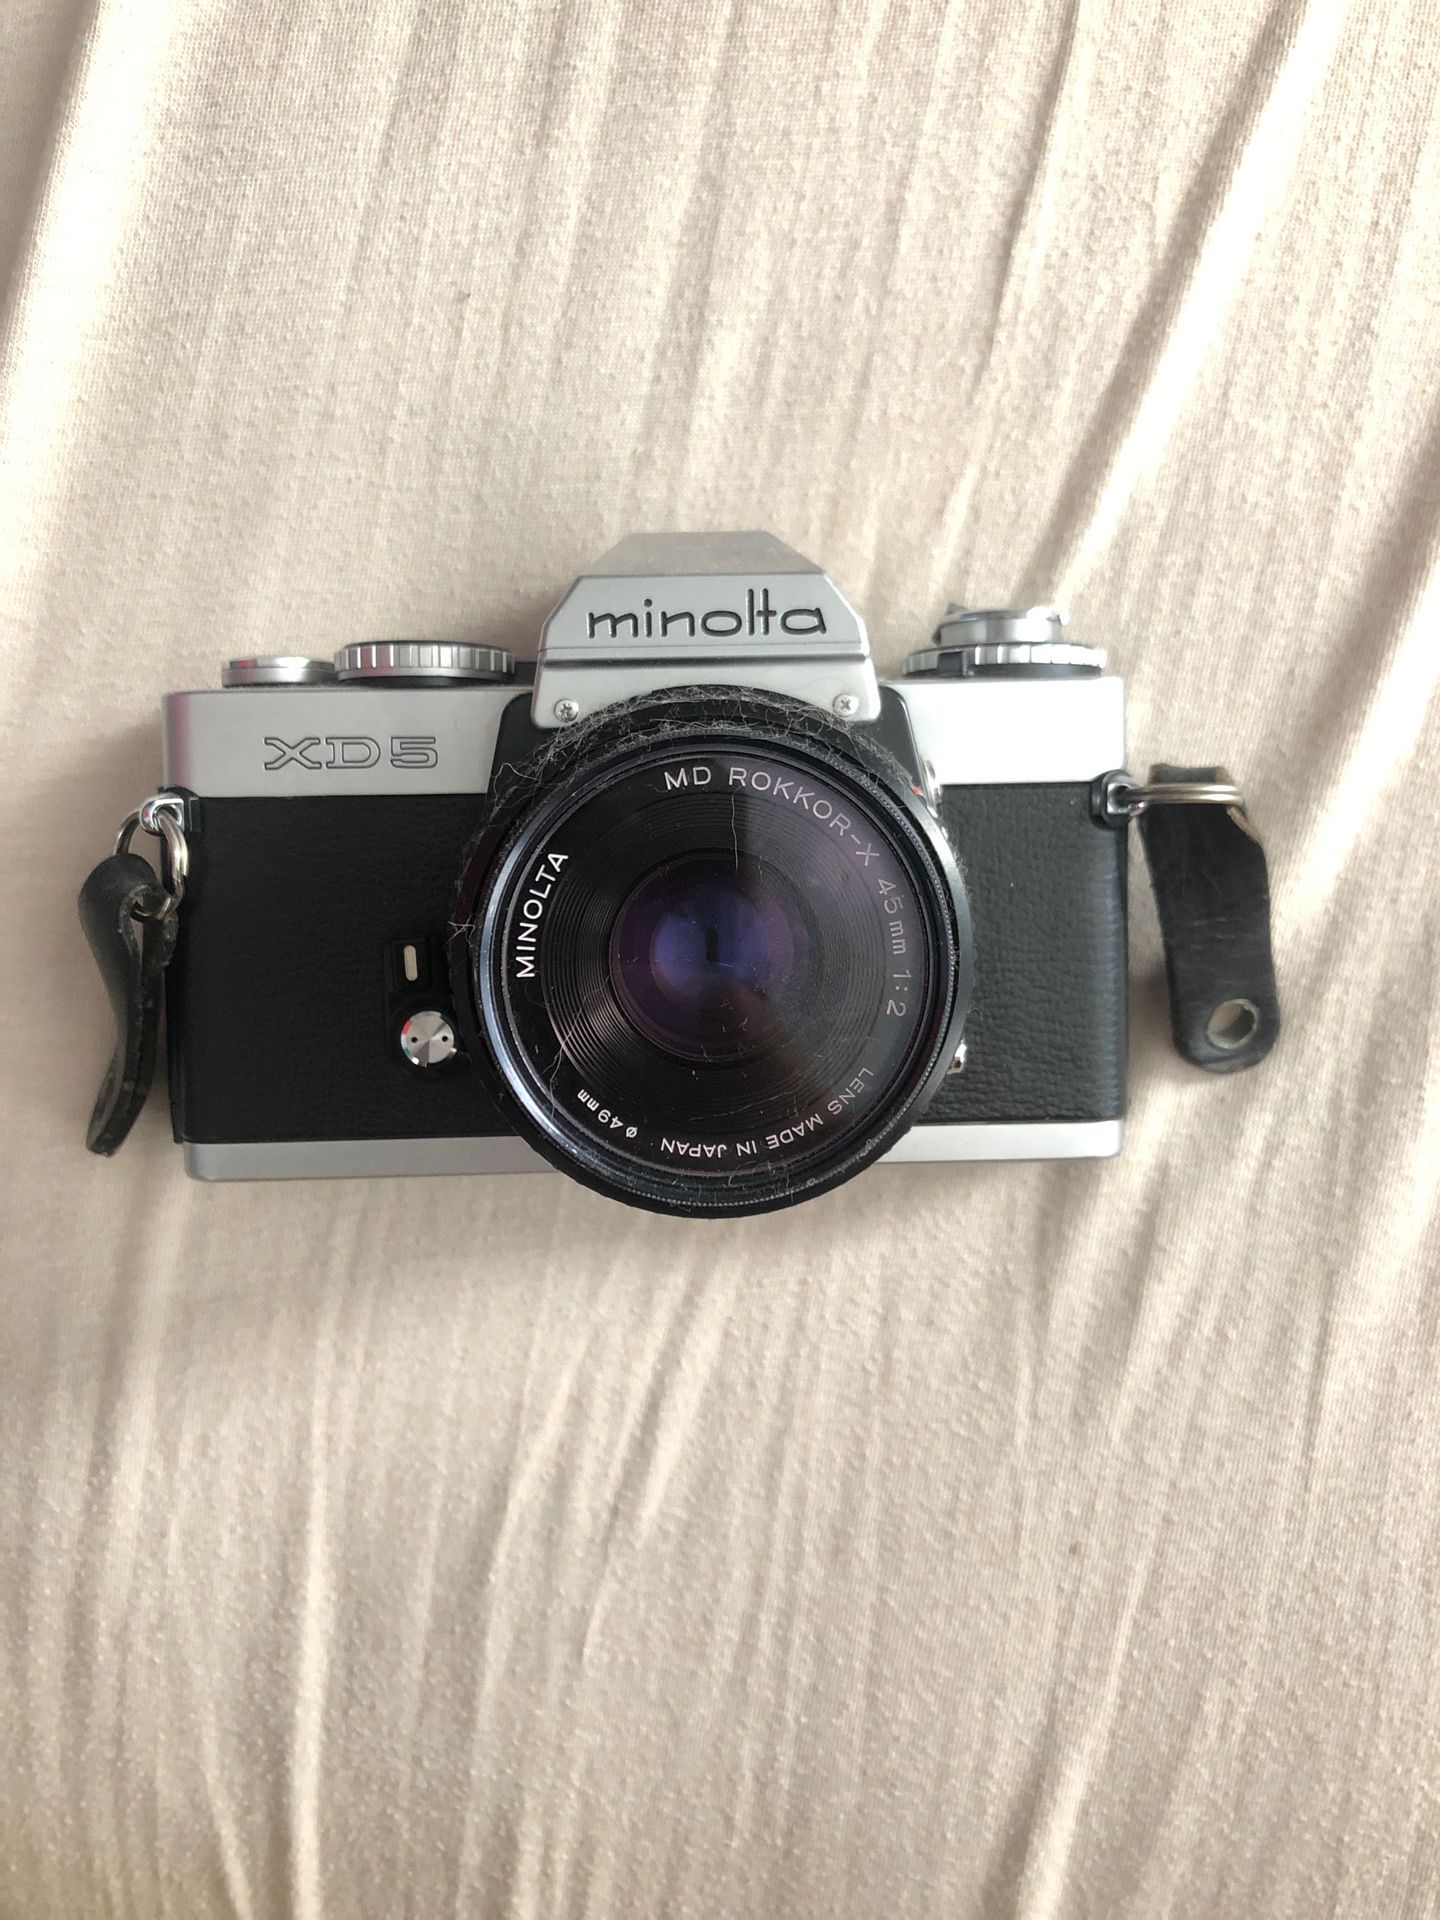 Old Minolta film camera